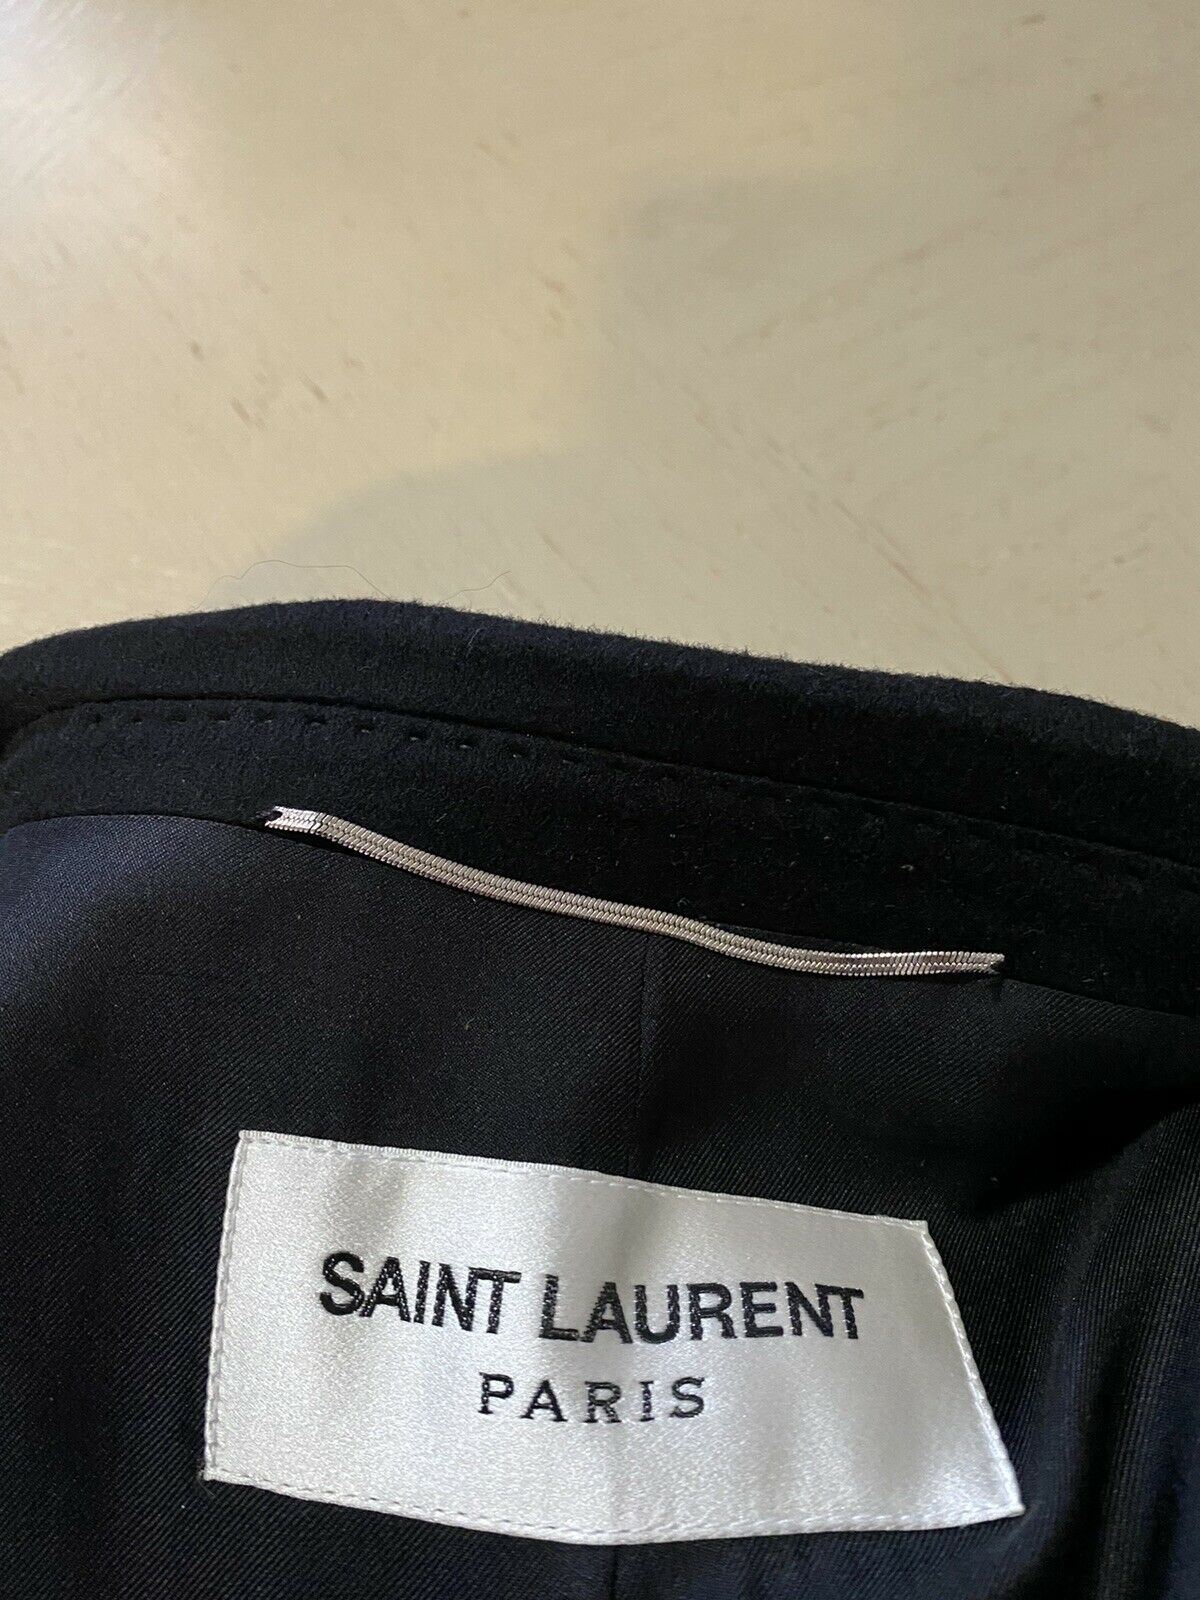 New $3790 Saint Laurent Men Wool/Cashmere Overcoat Coat Black 38 US/48 Eu Italy